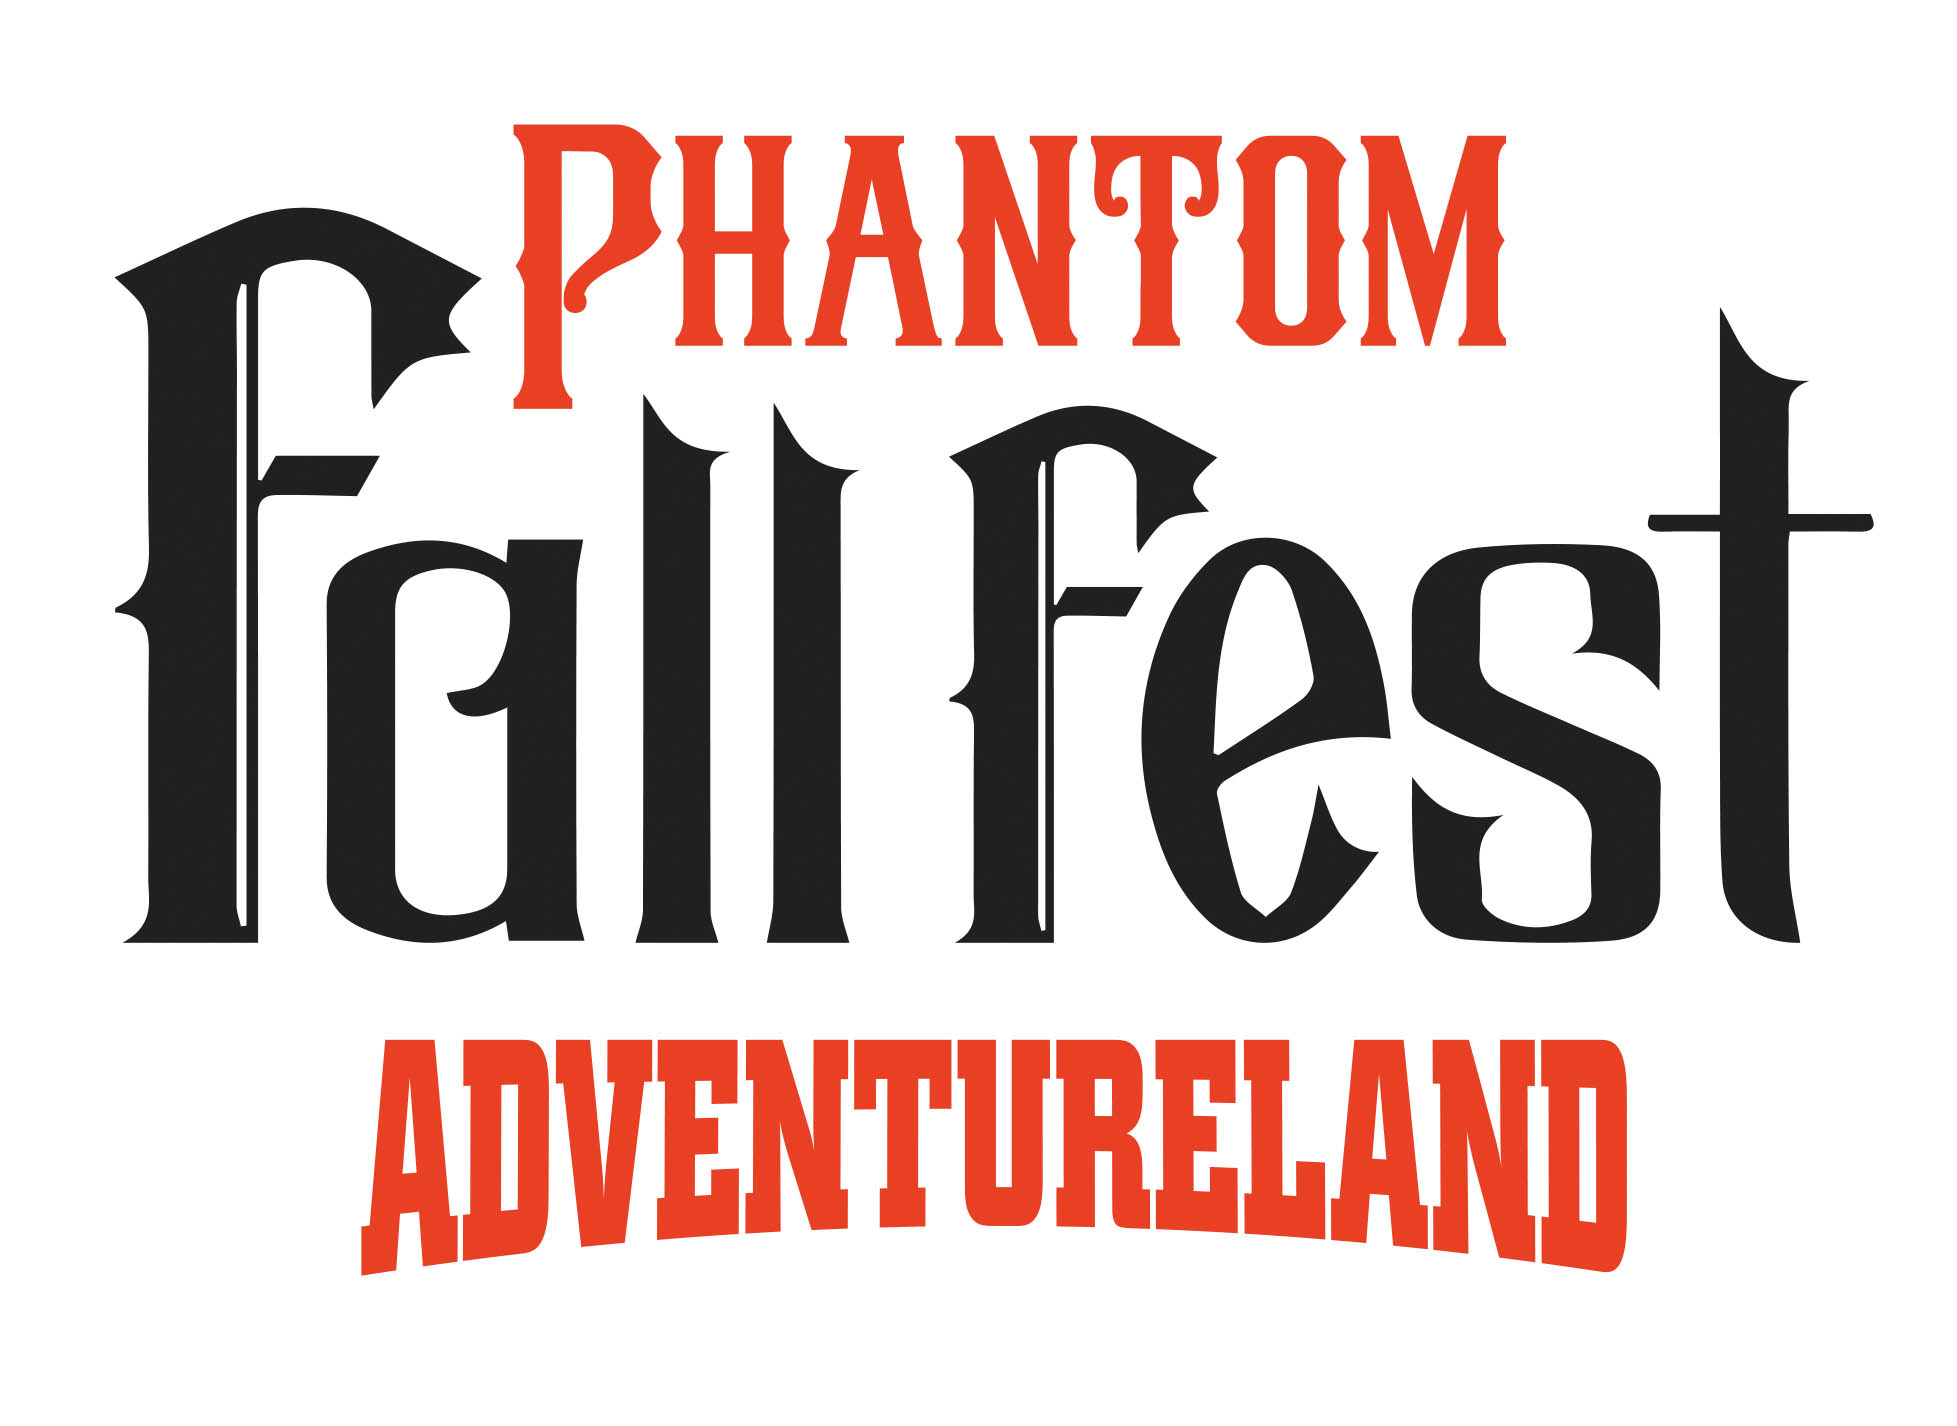 Halloween heads for Adventureland new Phantom Fall Fest details emerge